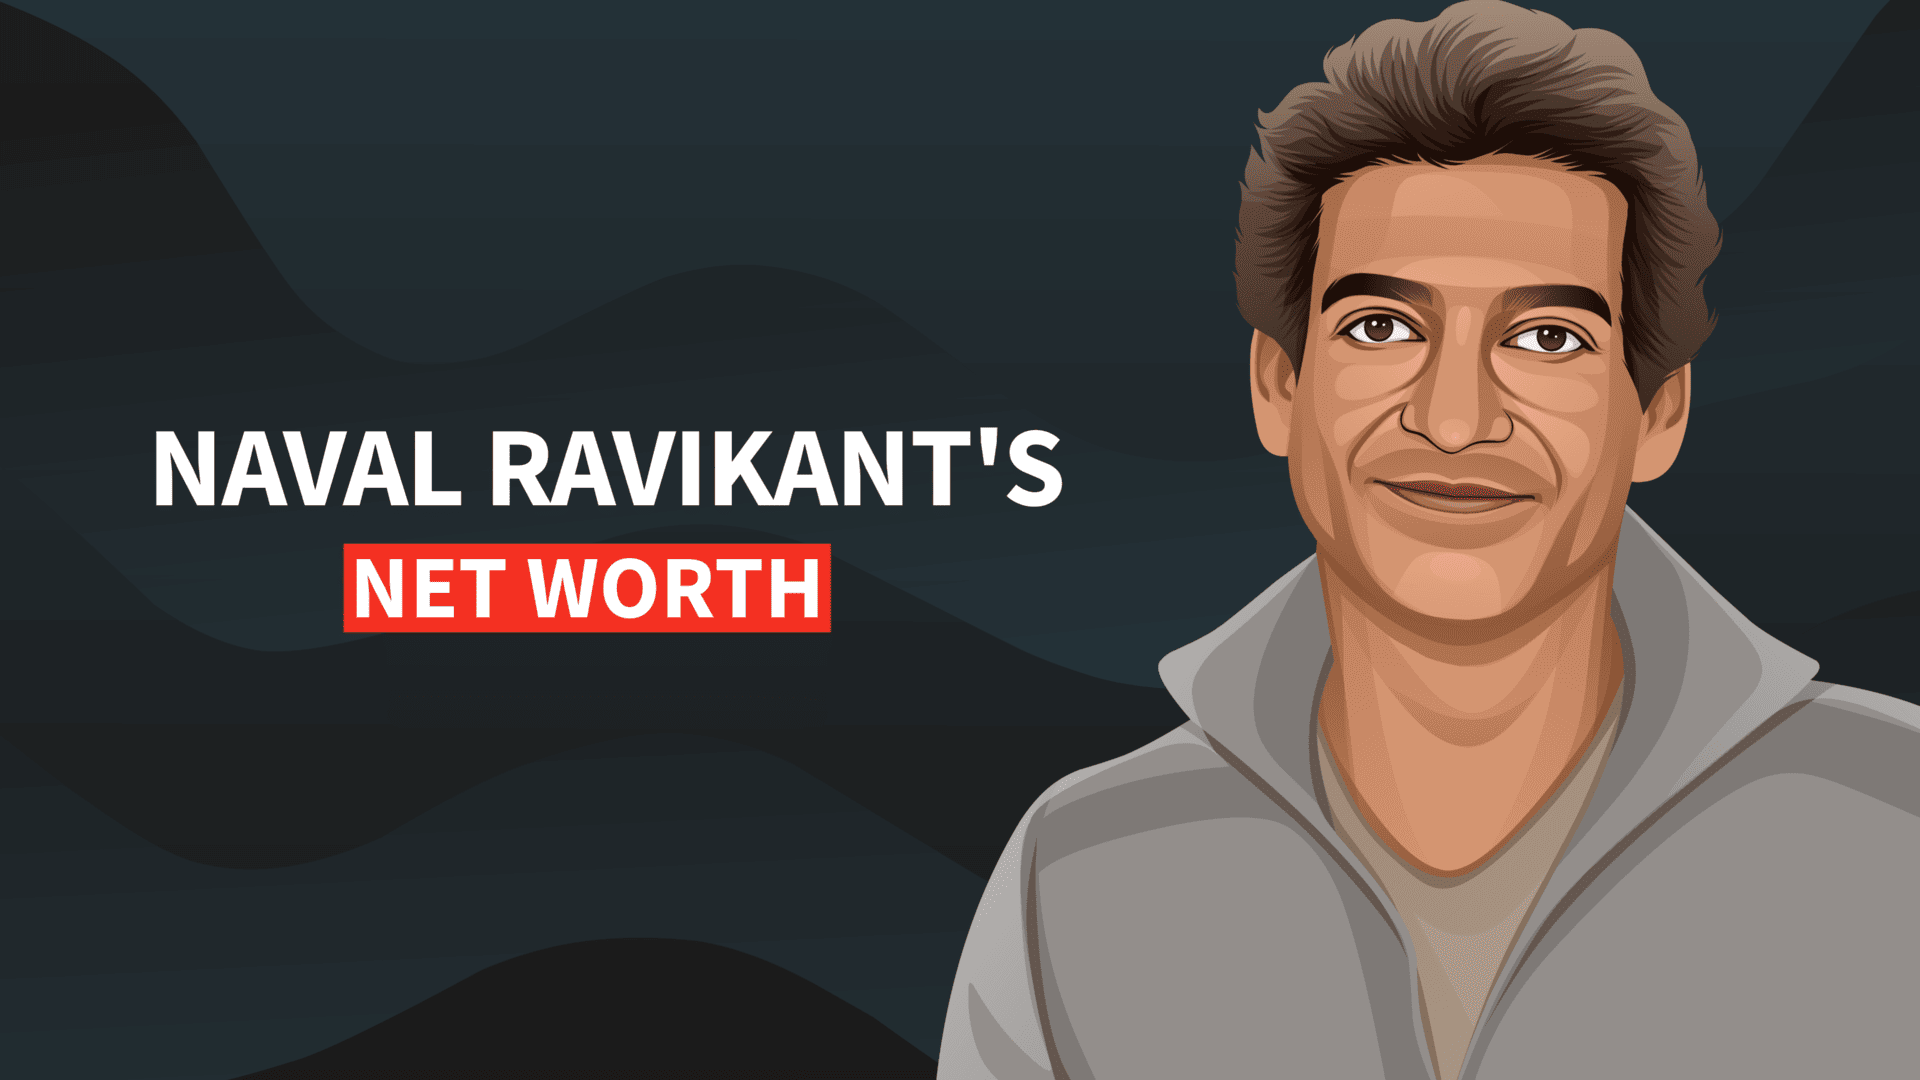 Naval Ravikant's Net Worth and Inspiring Story